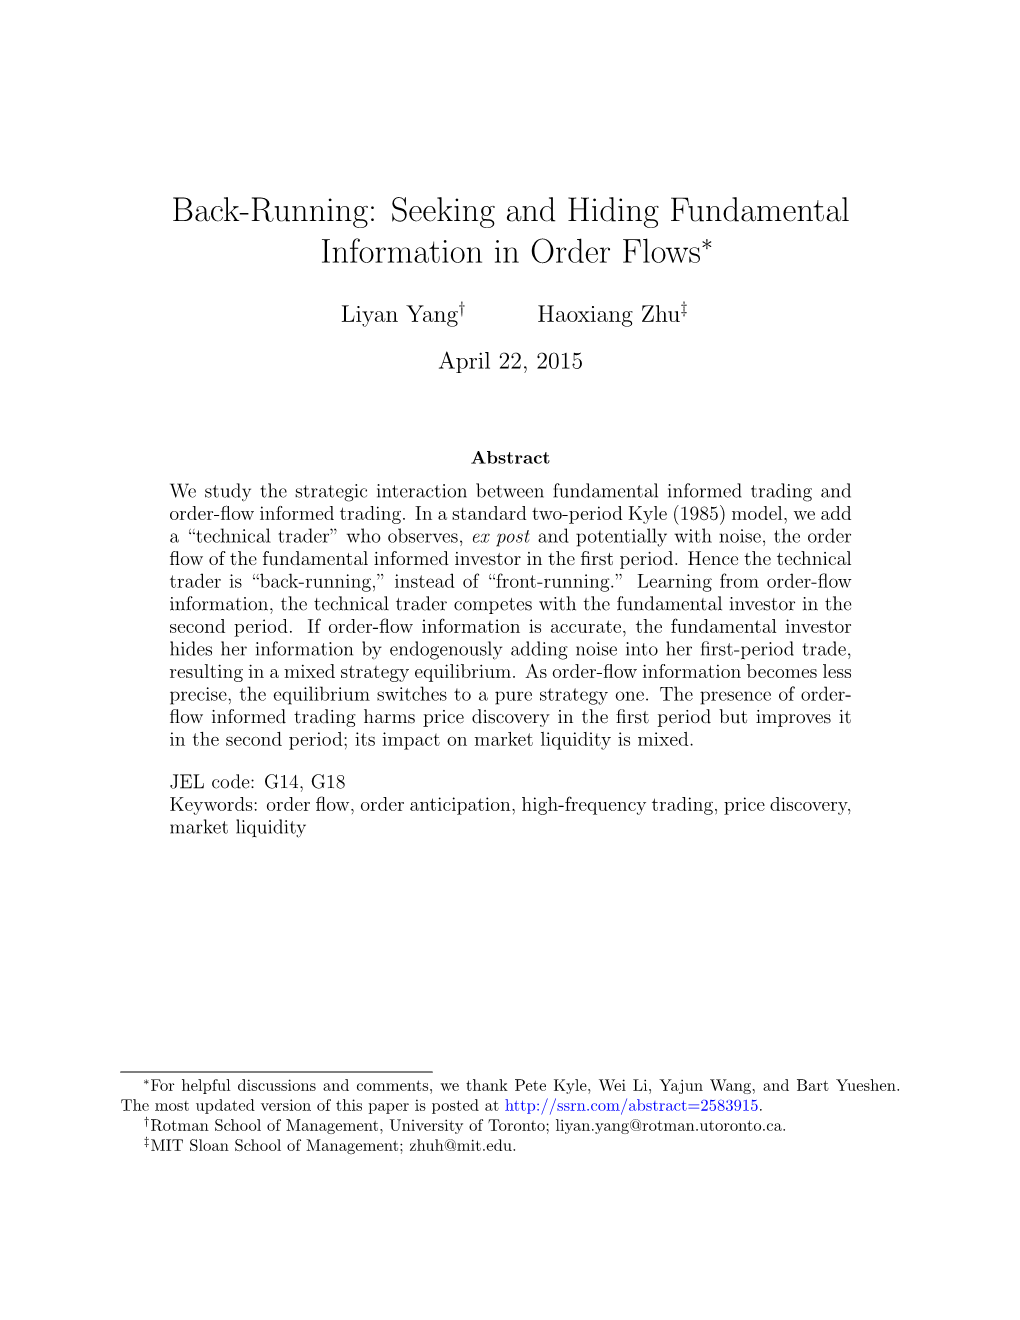 Back-Running: Seeking and Hiding Fundamental Information in Order Flows∗